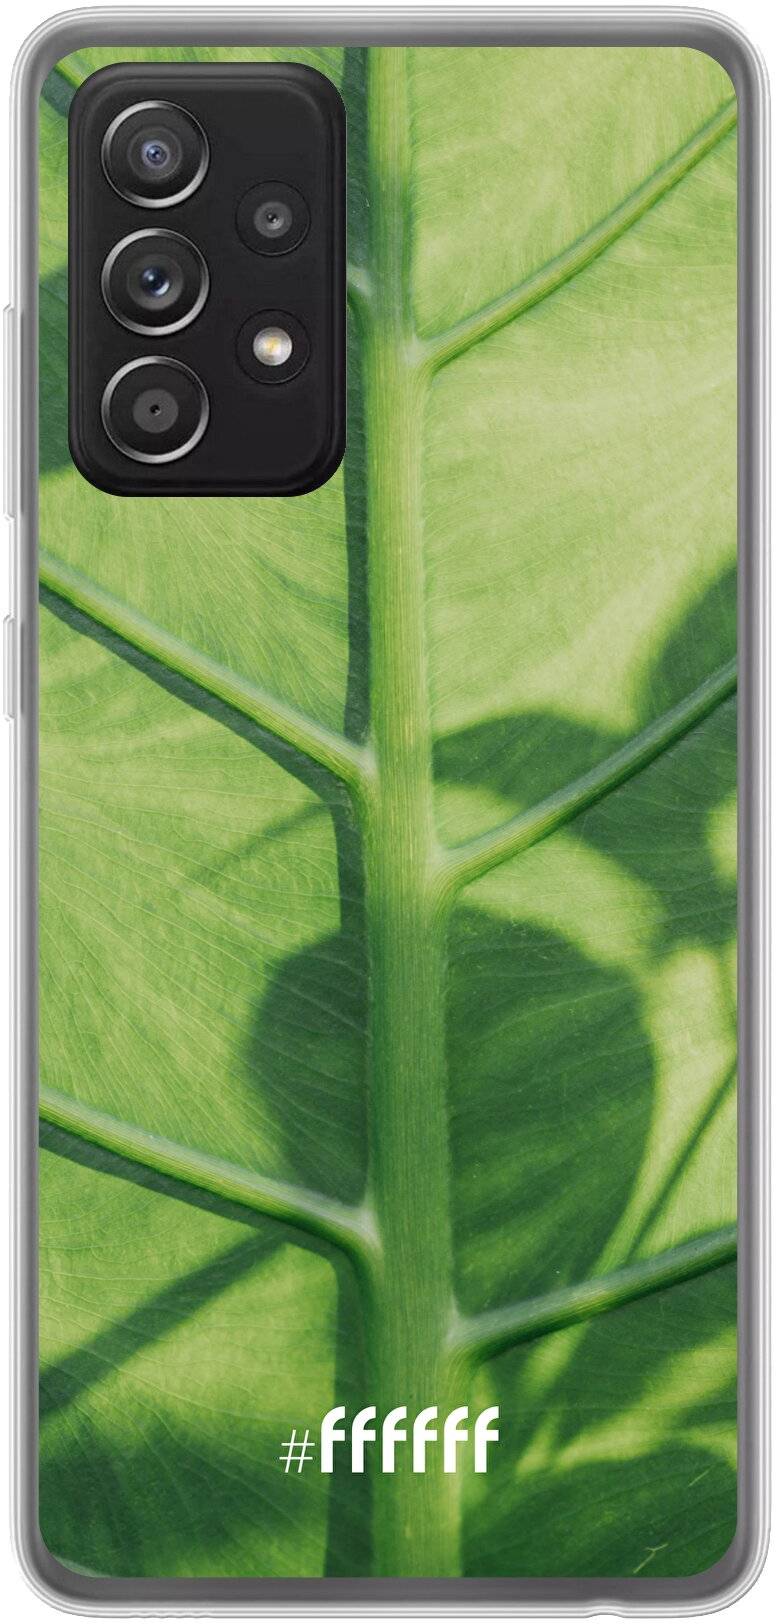 Leaves Macro Galaxy A52